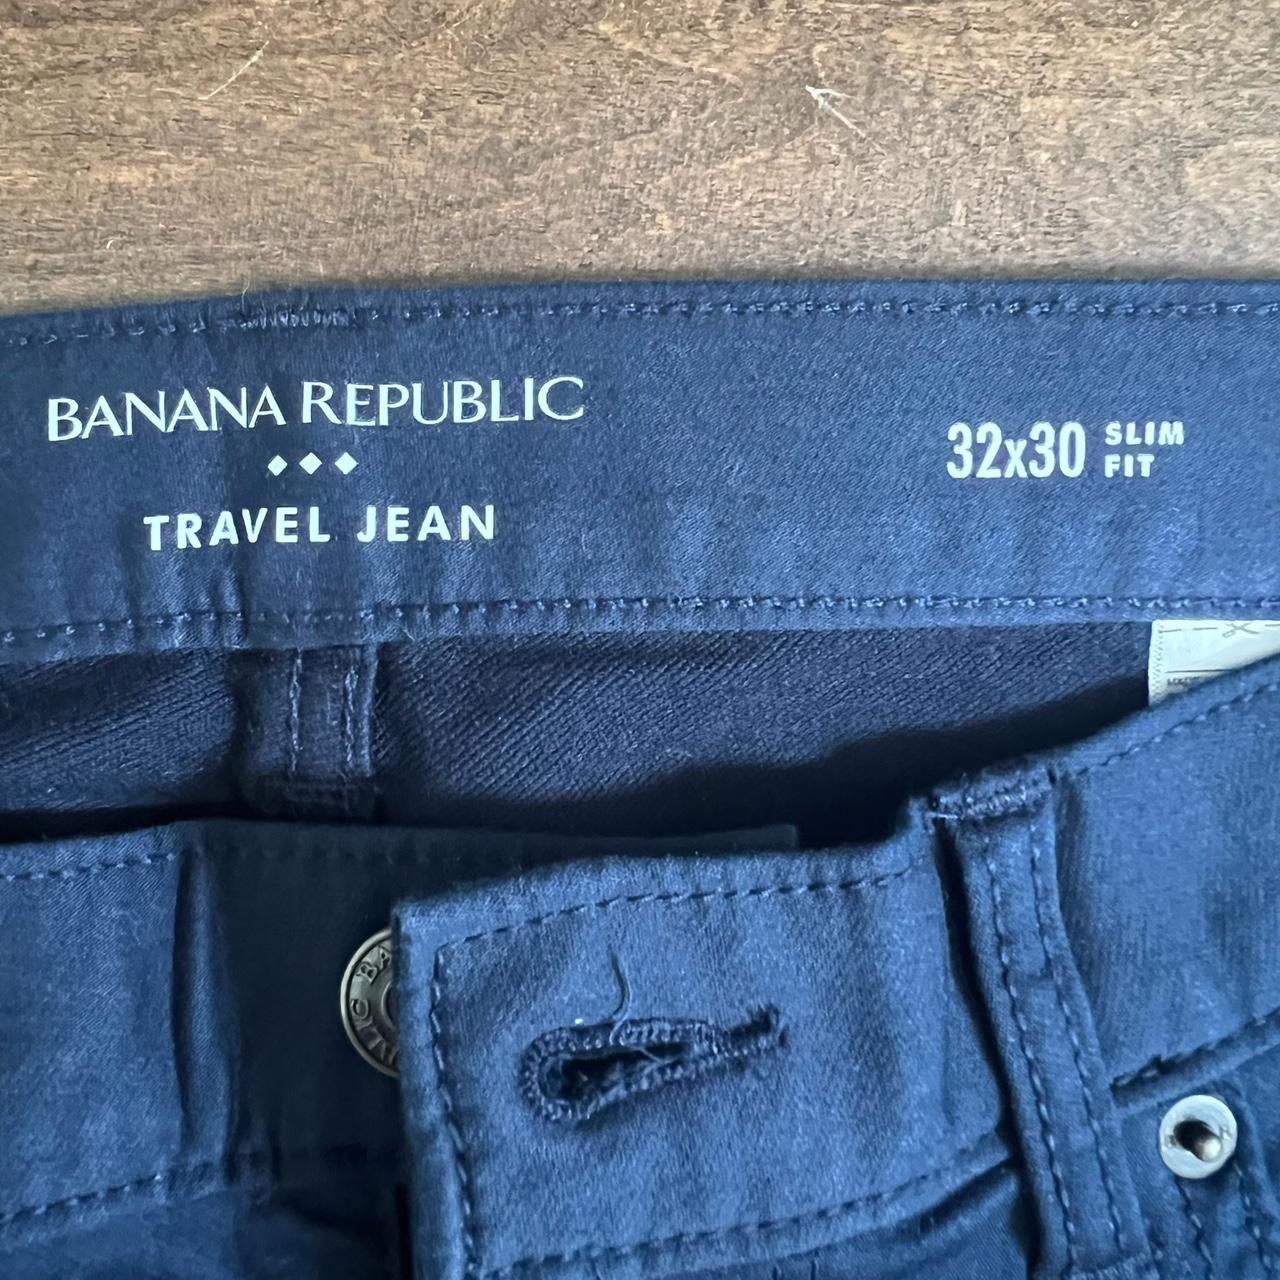 Banana Republic Men’s Travel Jean in... - Depop